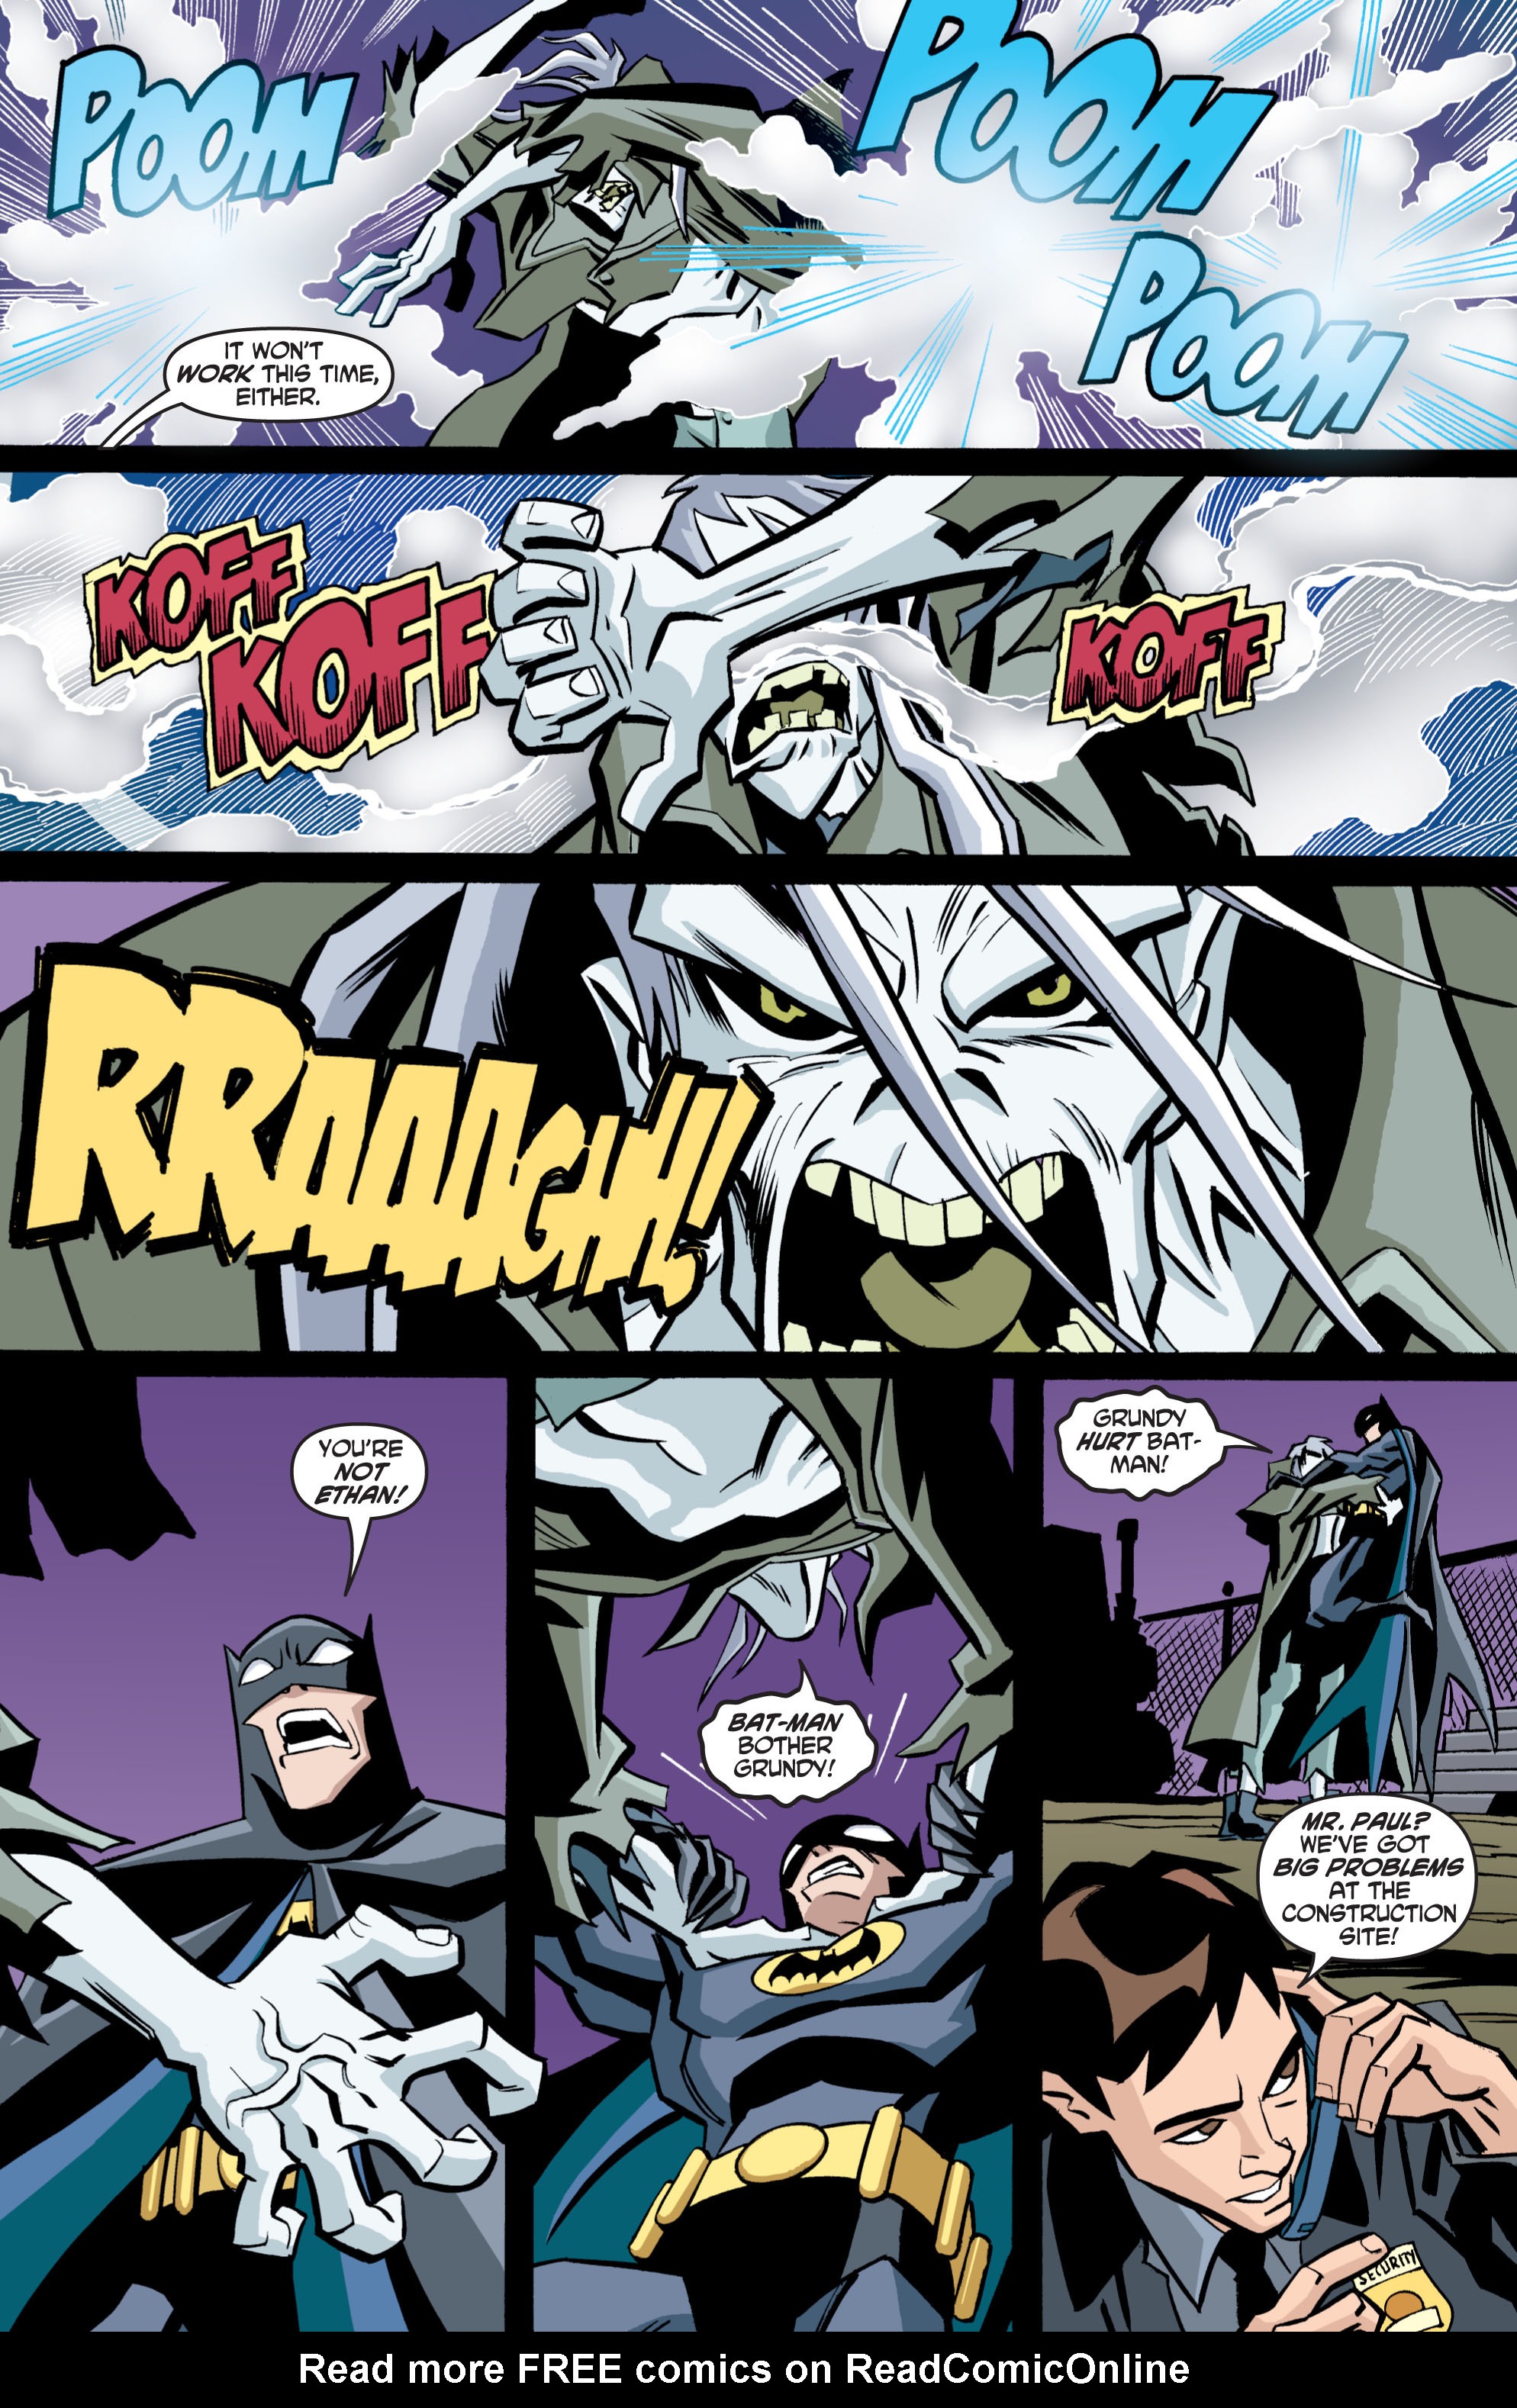 The Batman Strikes 19 ReadAllComics